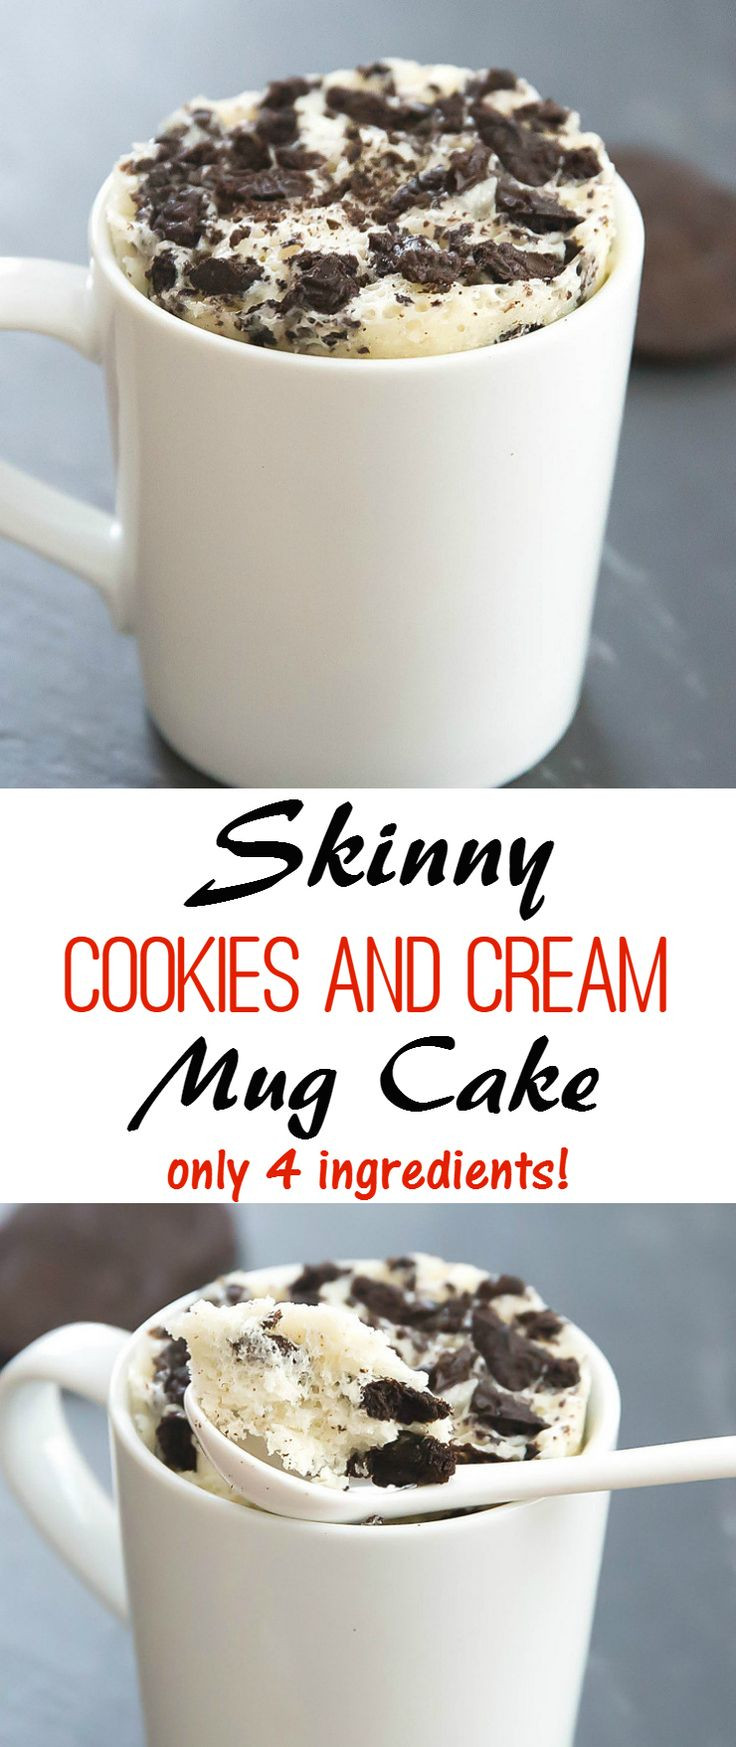 Low Calorie Mug Cake Recipes
 Skinny Cookies and Cream Mug Cake Recipe